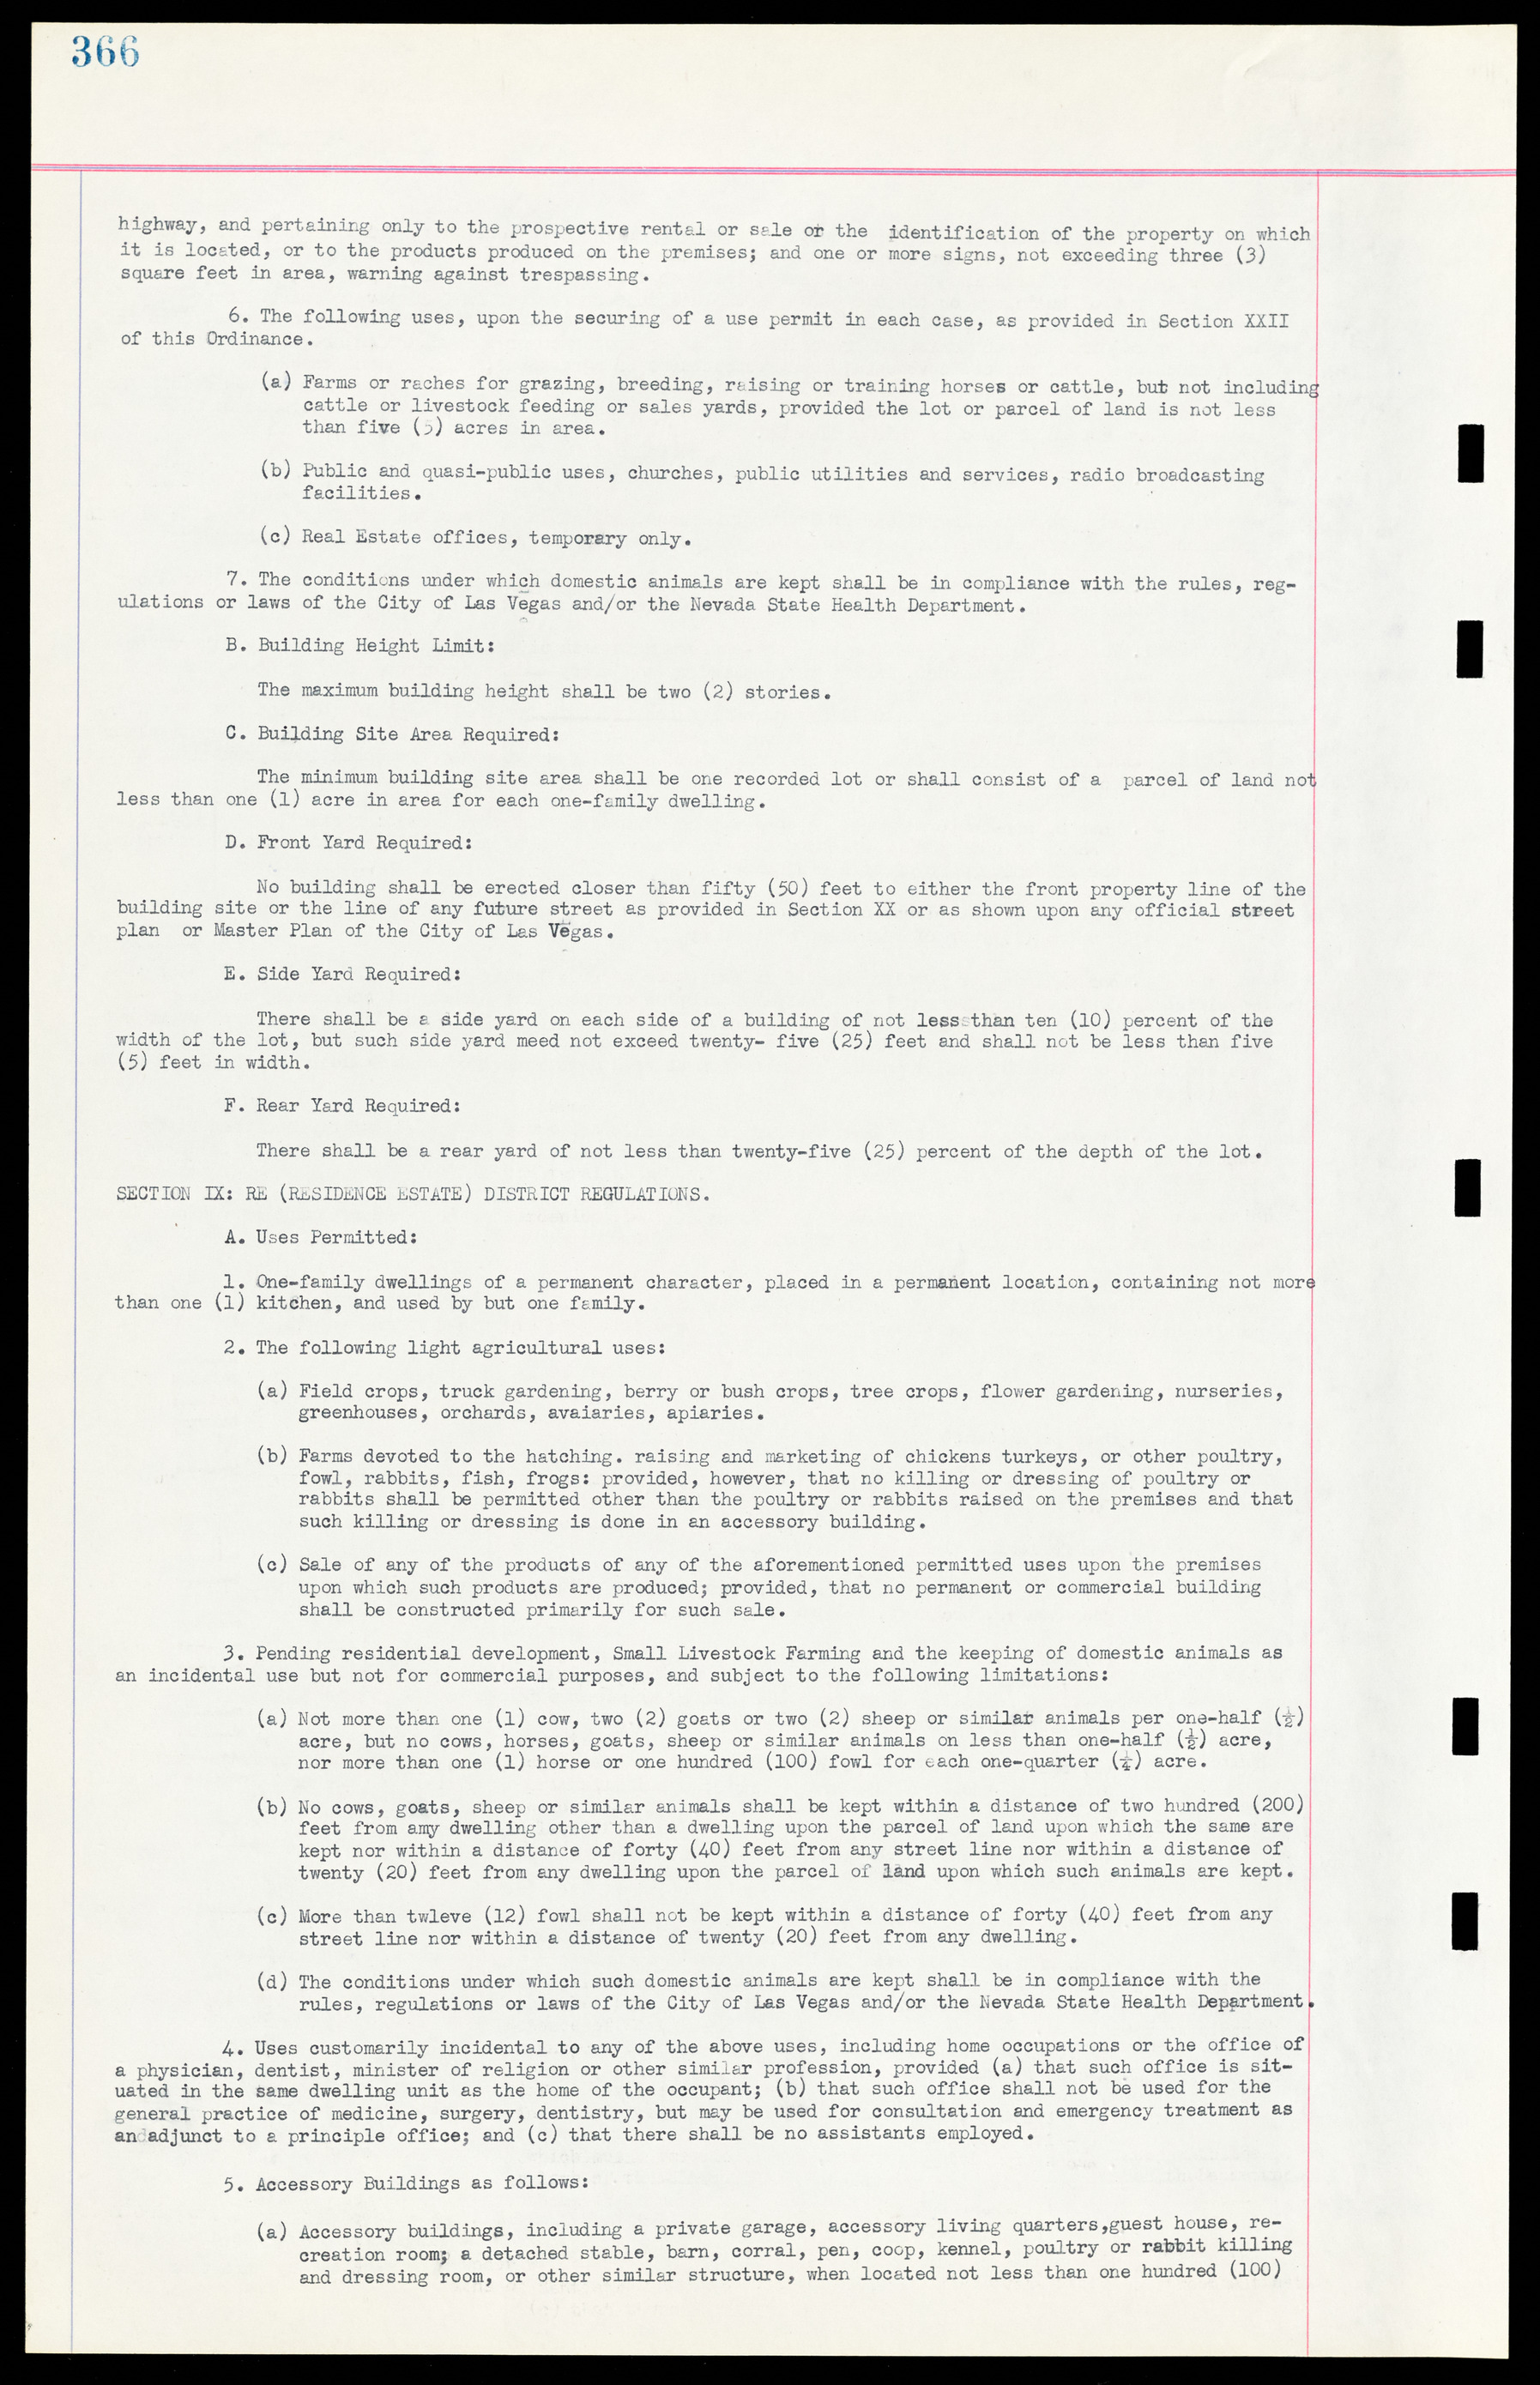 Las Vegas City Ordinances, March 31, 1933 to October 25, 1950, lvc000014-395